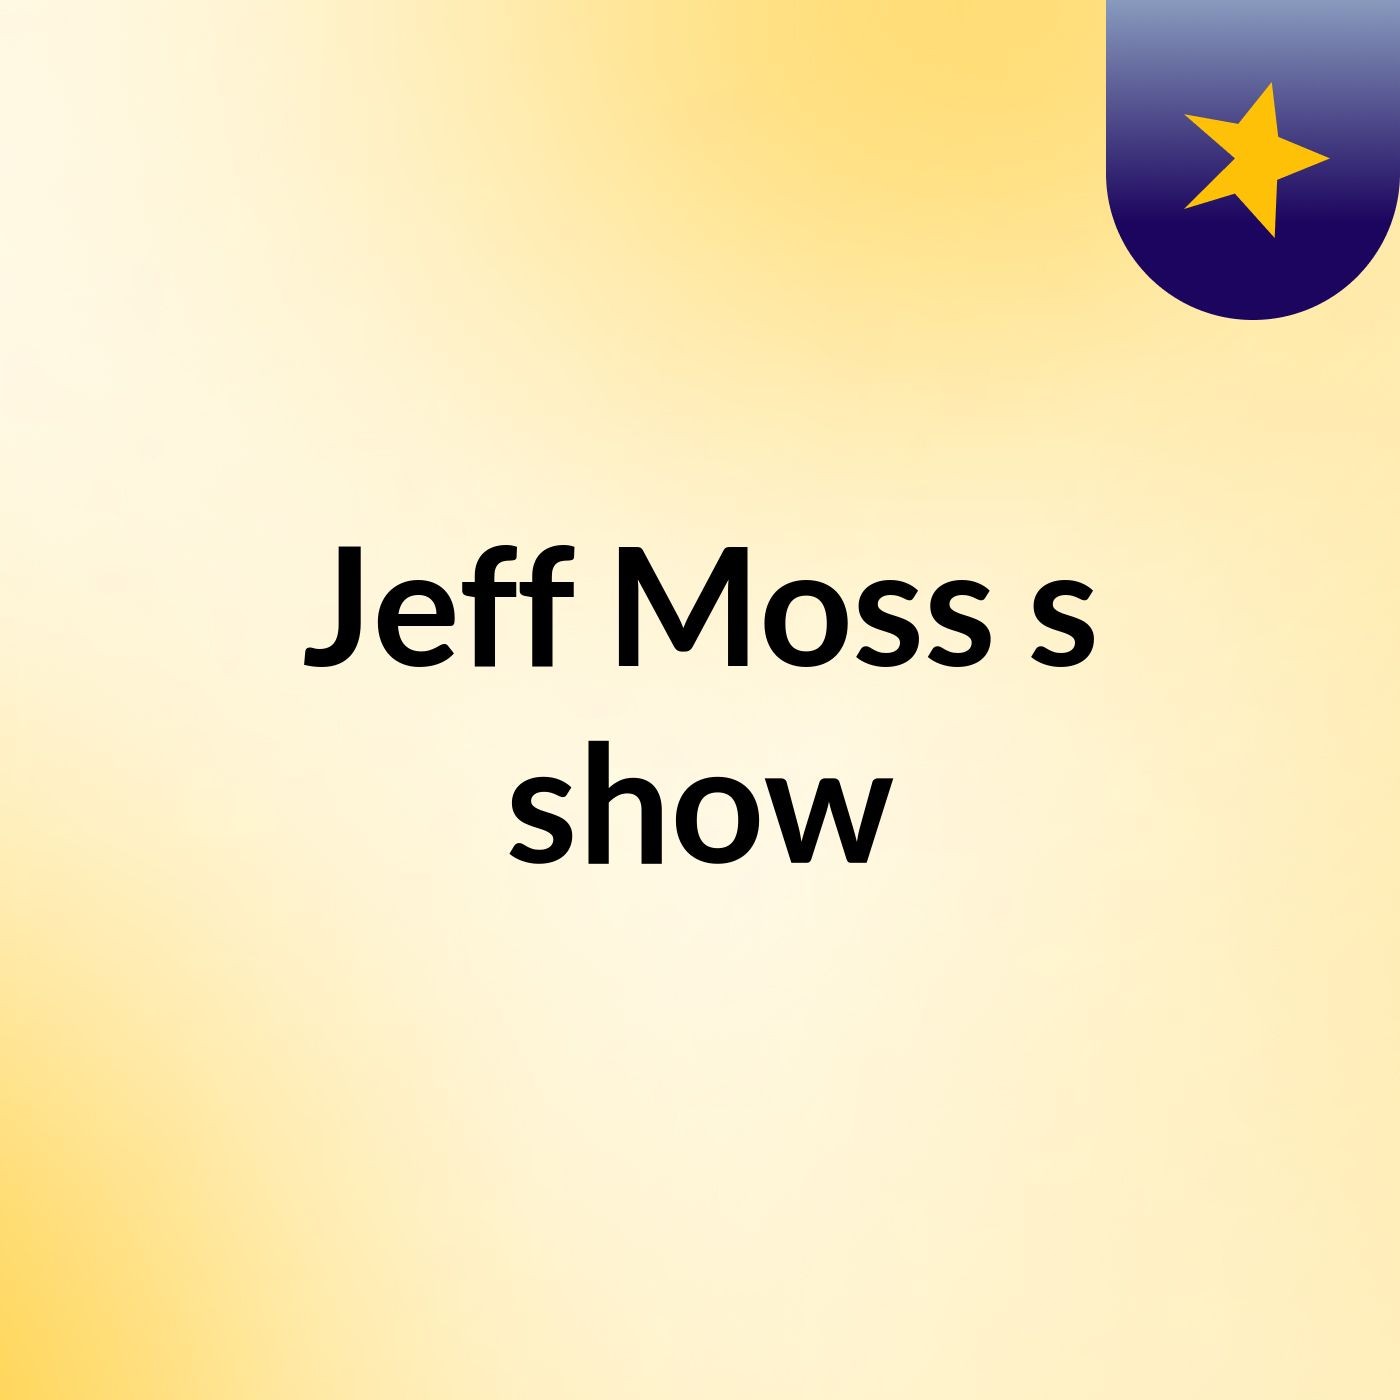 Jeff Moss's show